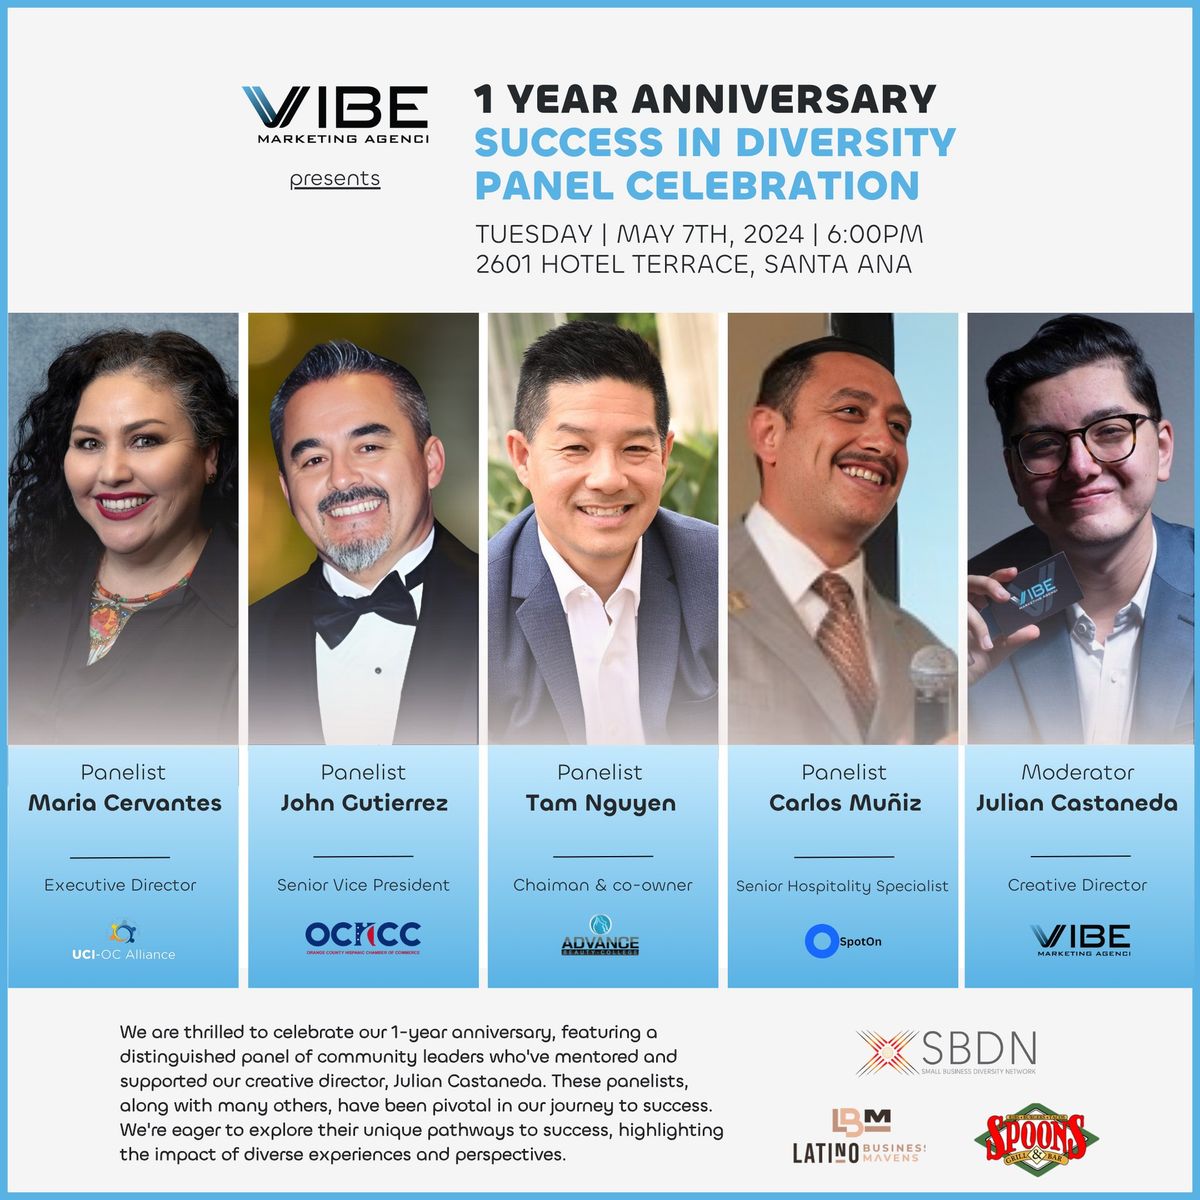 Success in Diversity Panel Celebration - Vibe 1 Year Anniversary